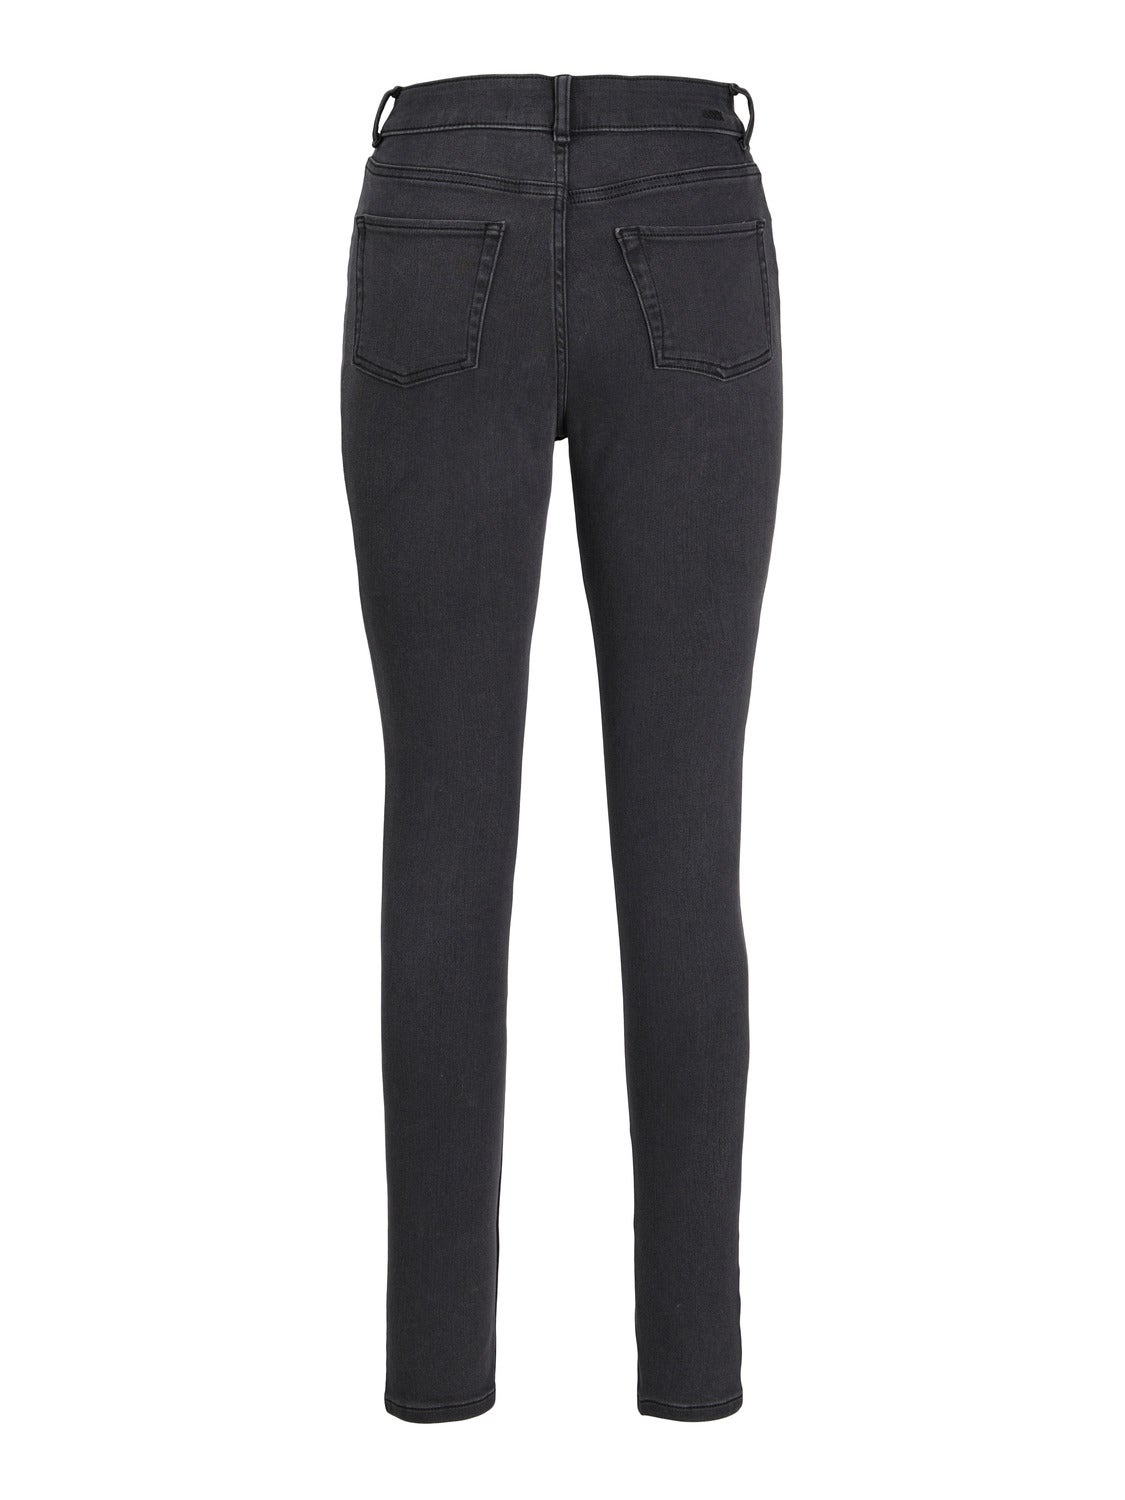 Berg kleding op Tegenover huren JXVIENNA HW NS1006 Skinny fit jeans with 20% discount! | Jack & Jones®